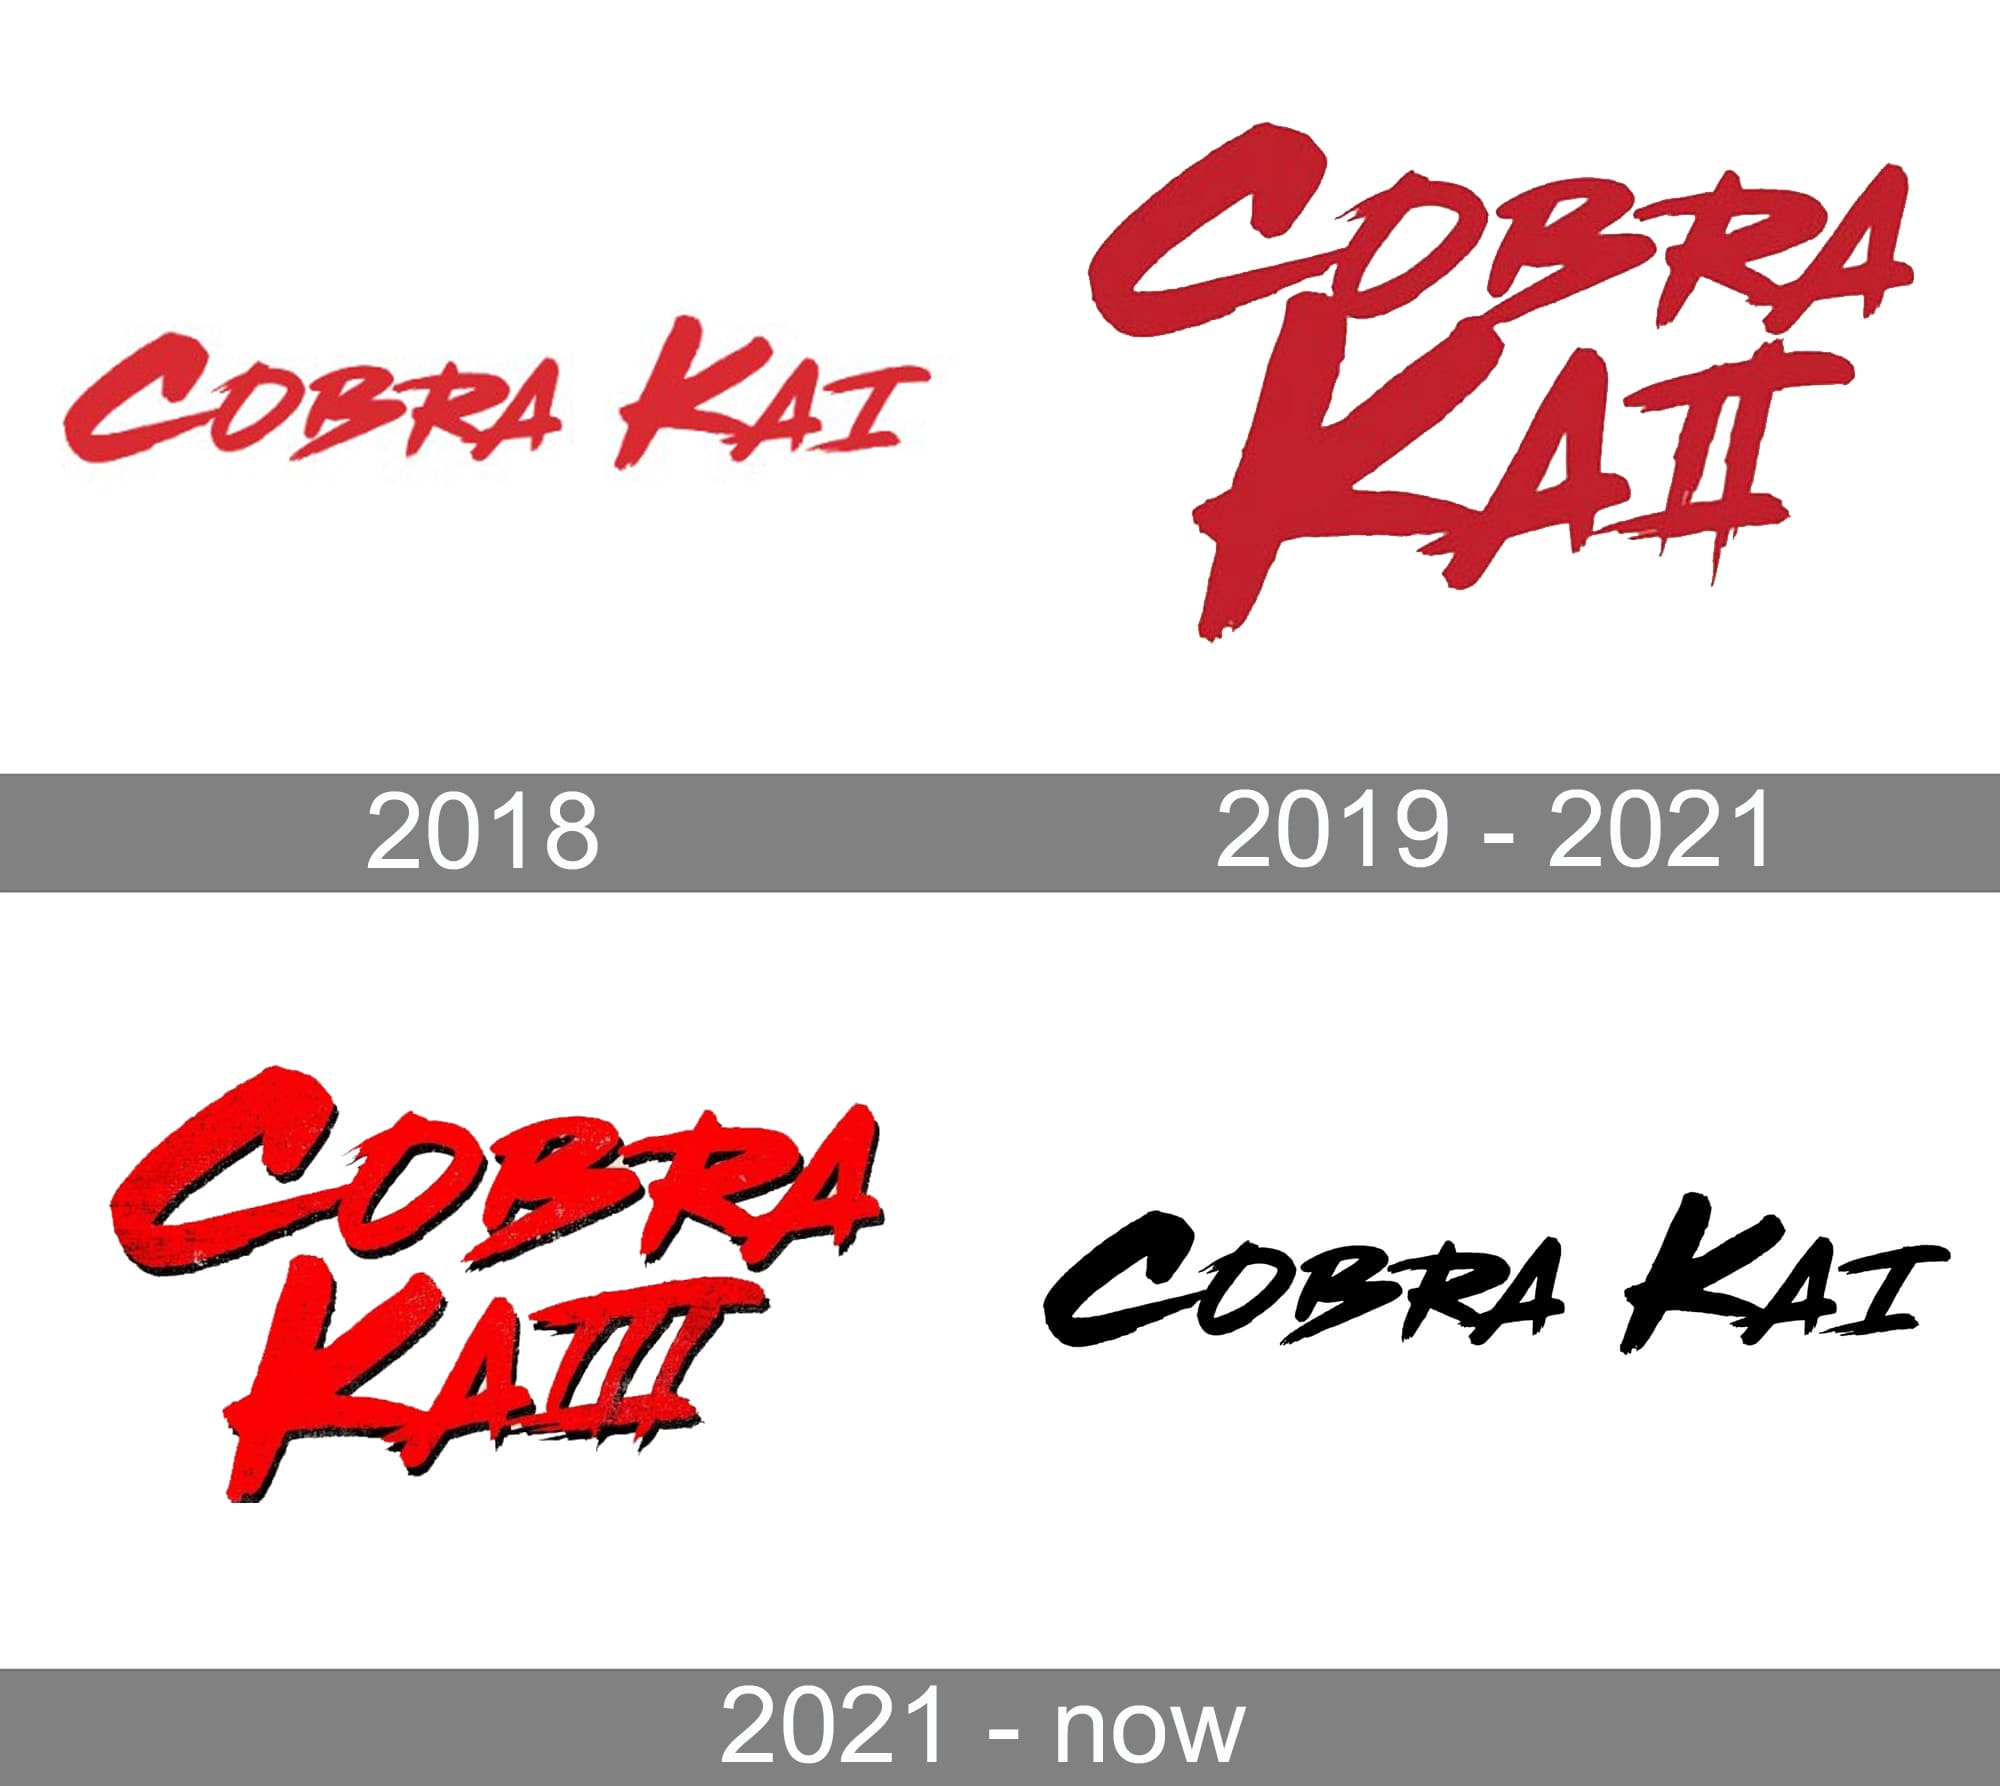 Cobra kai Logo Design – History, Meaning and Evolution